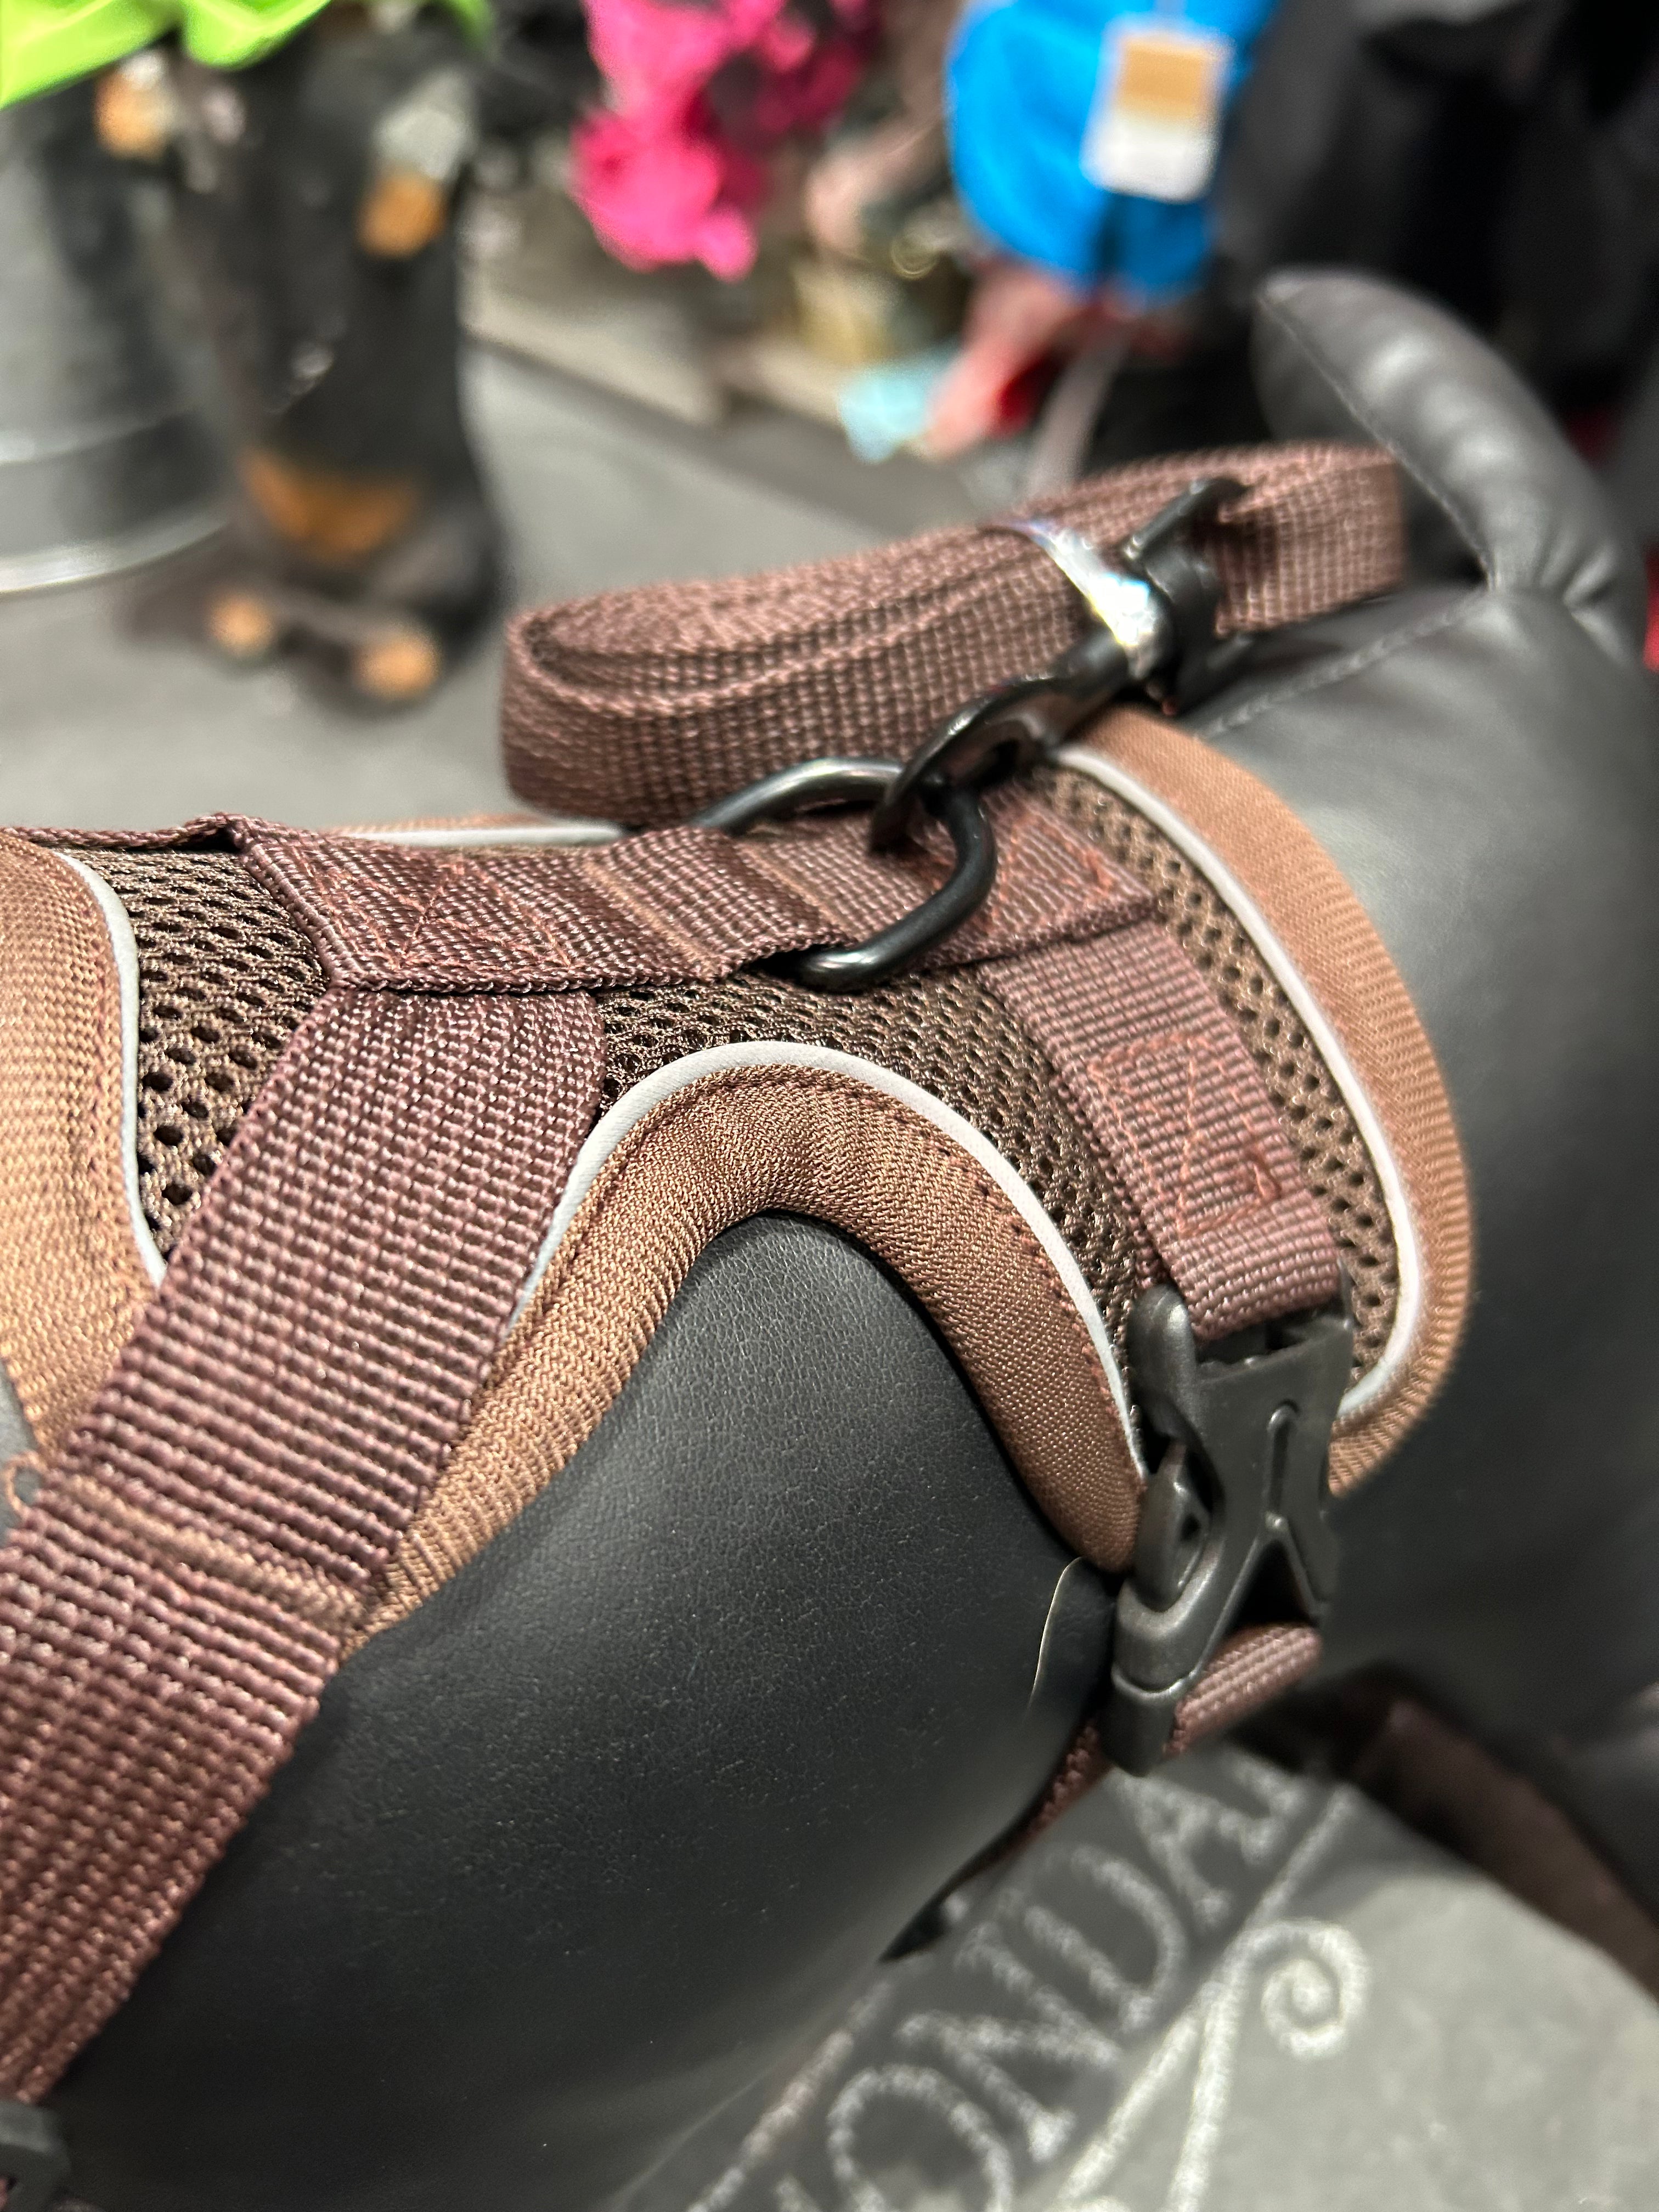 Adjustable harness and matching leash set